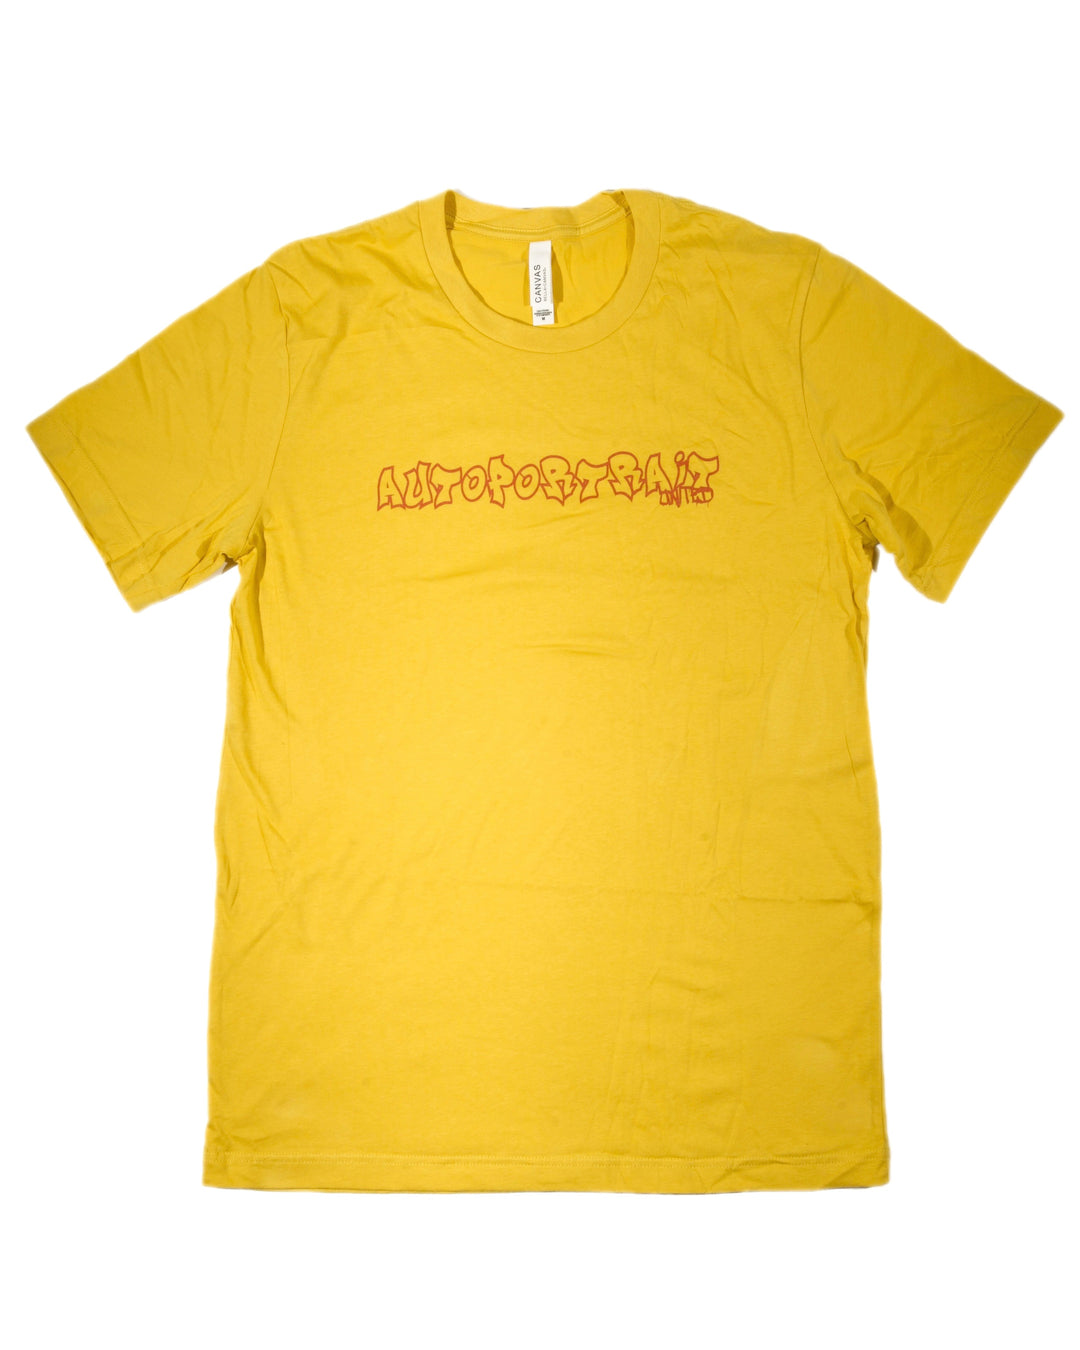 United Autoportrait T-Shirt Yellow